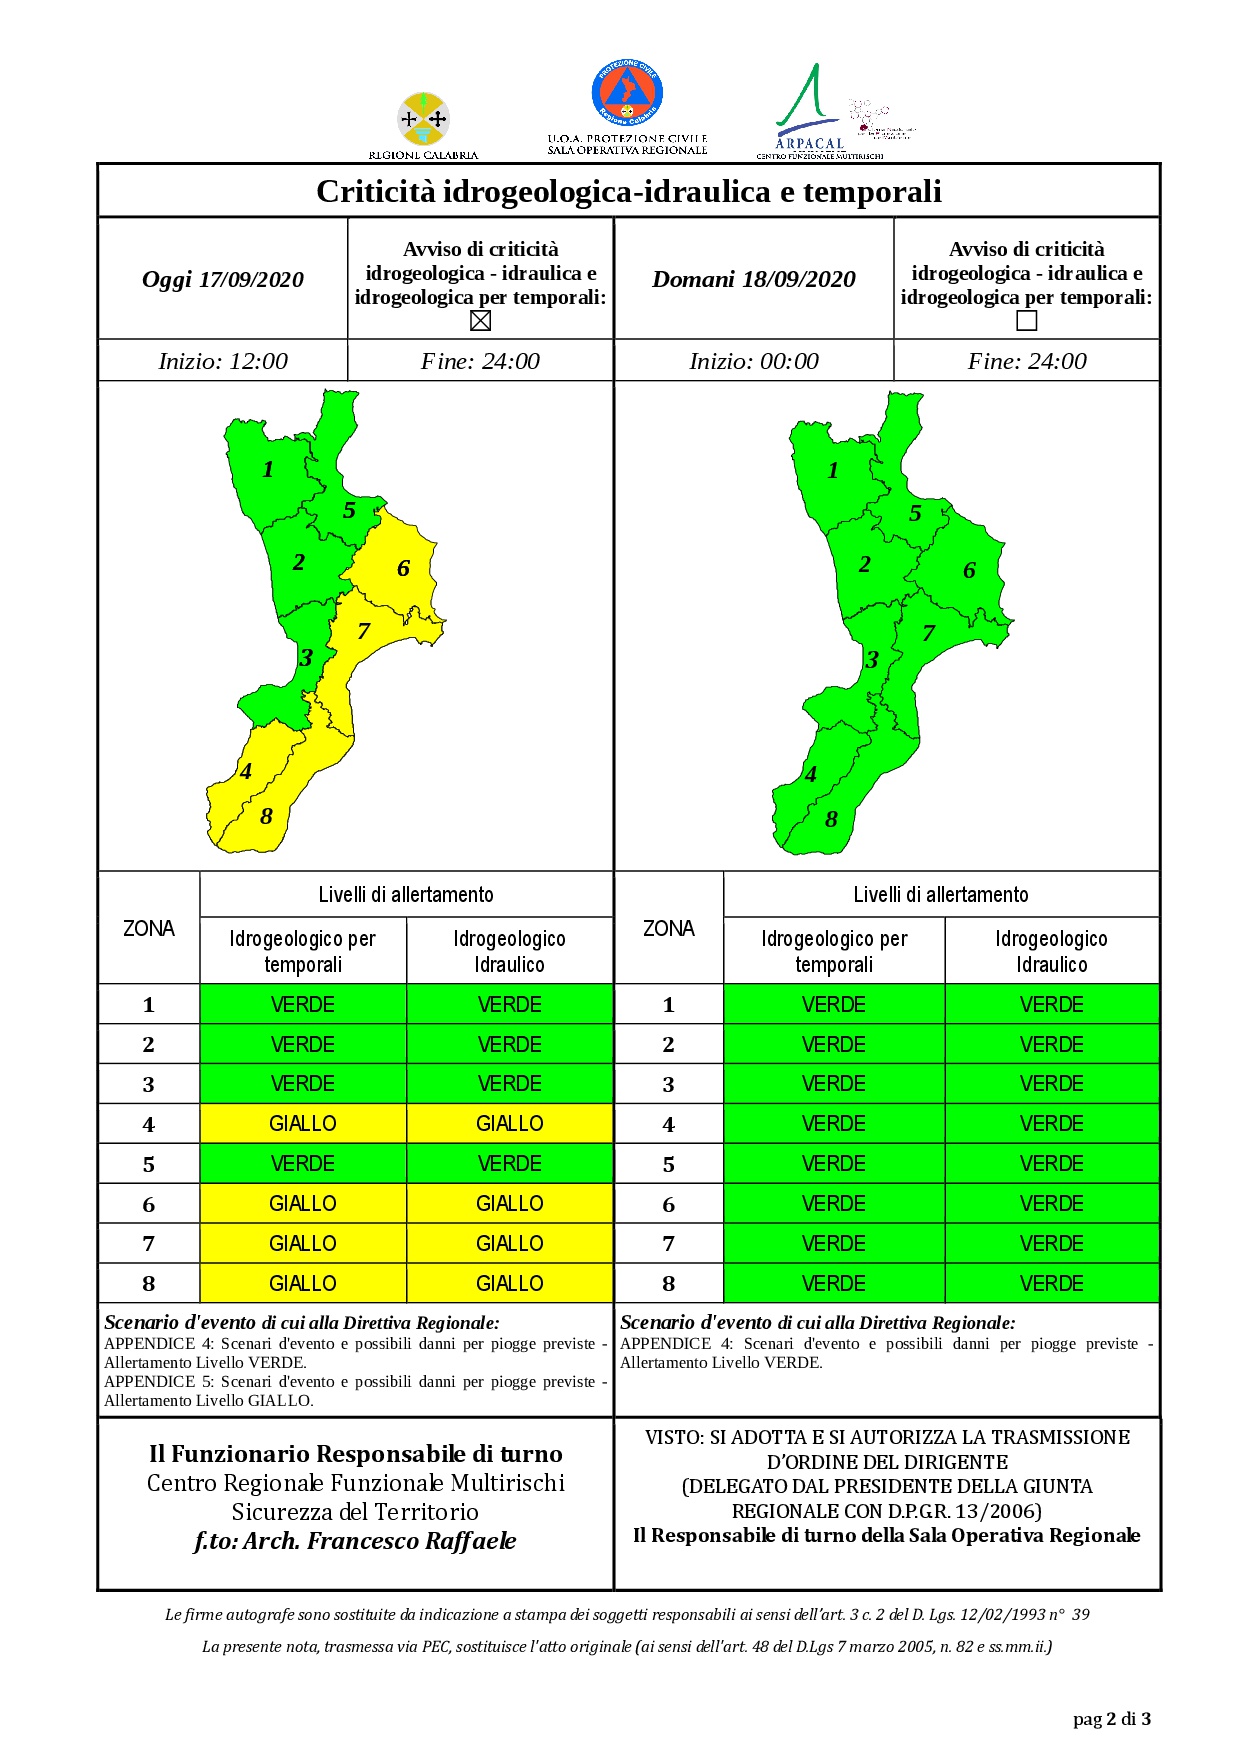 Criticità idrogeologica-idraulica e temporali in Calabria 17-09-2020